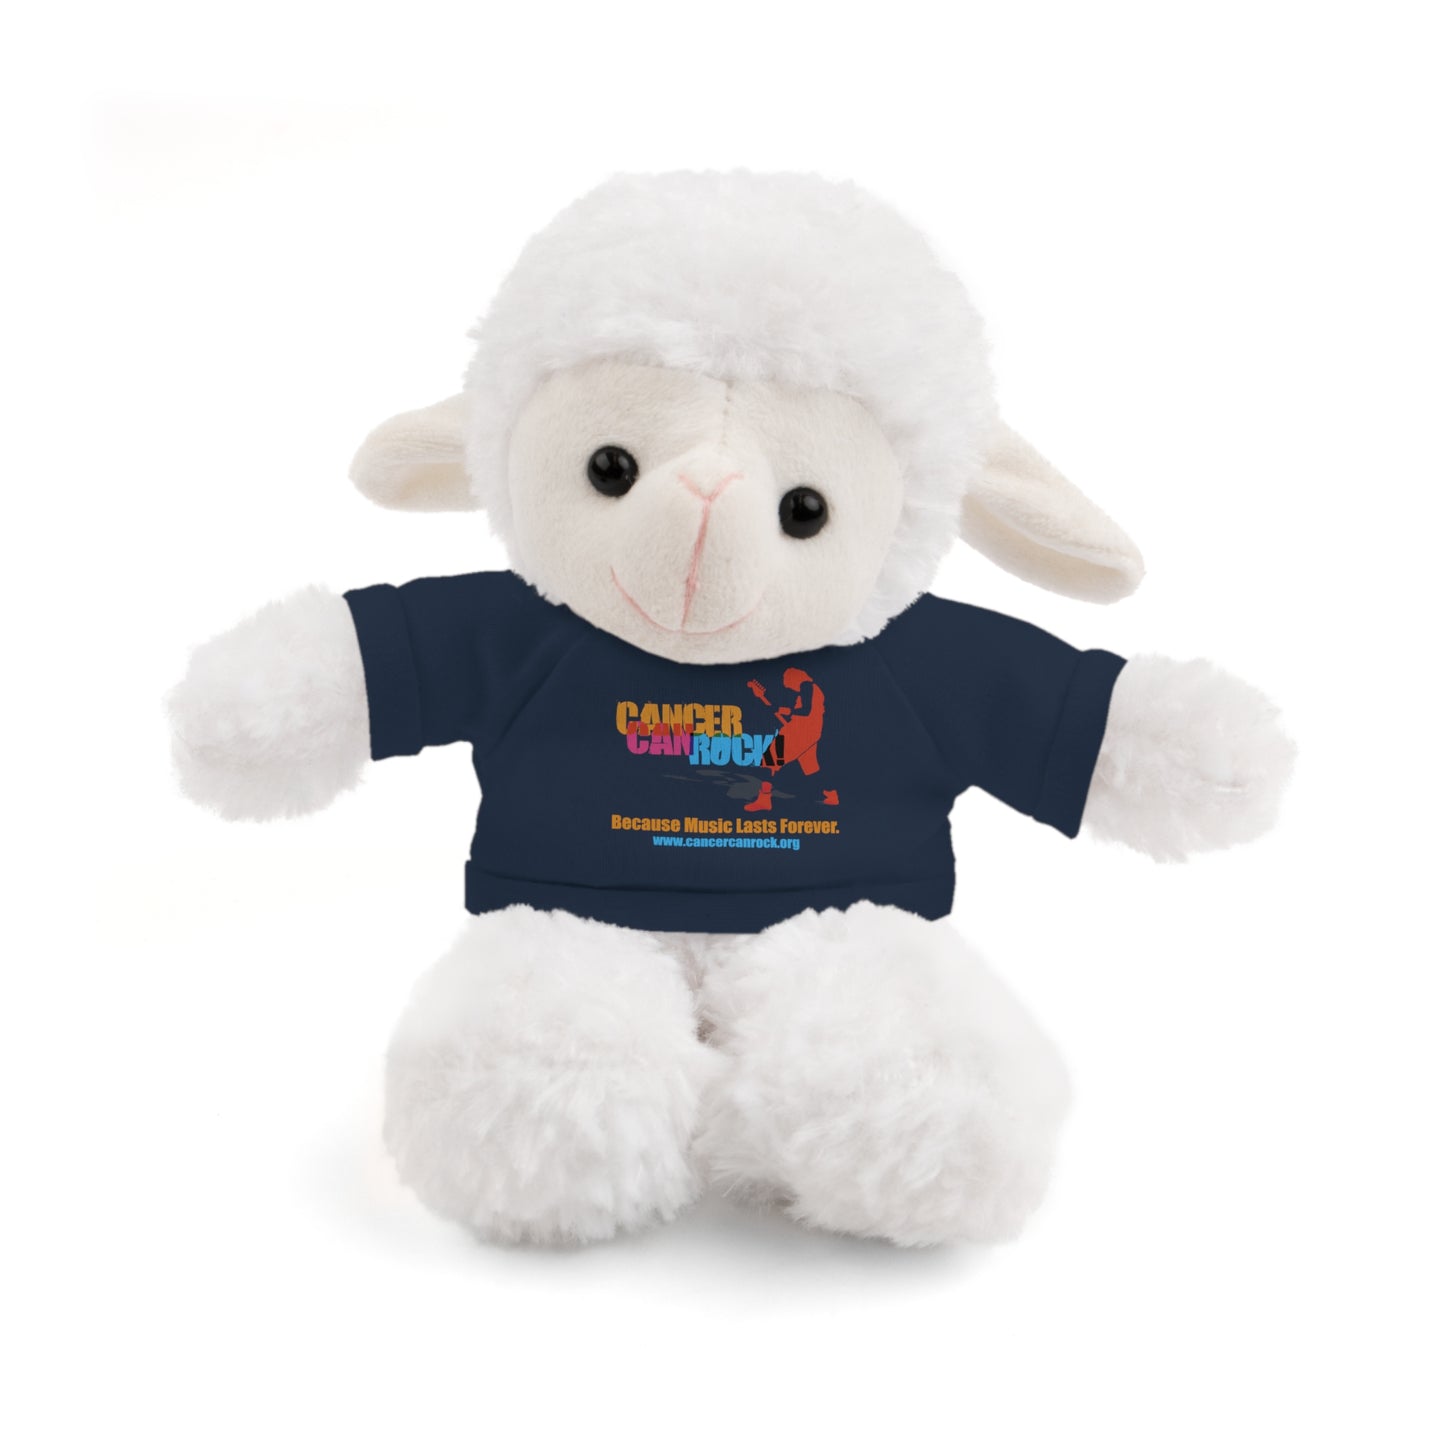 Stuffed Animal with T-Shirt